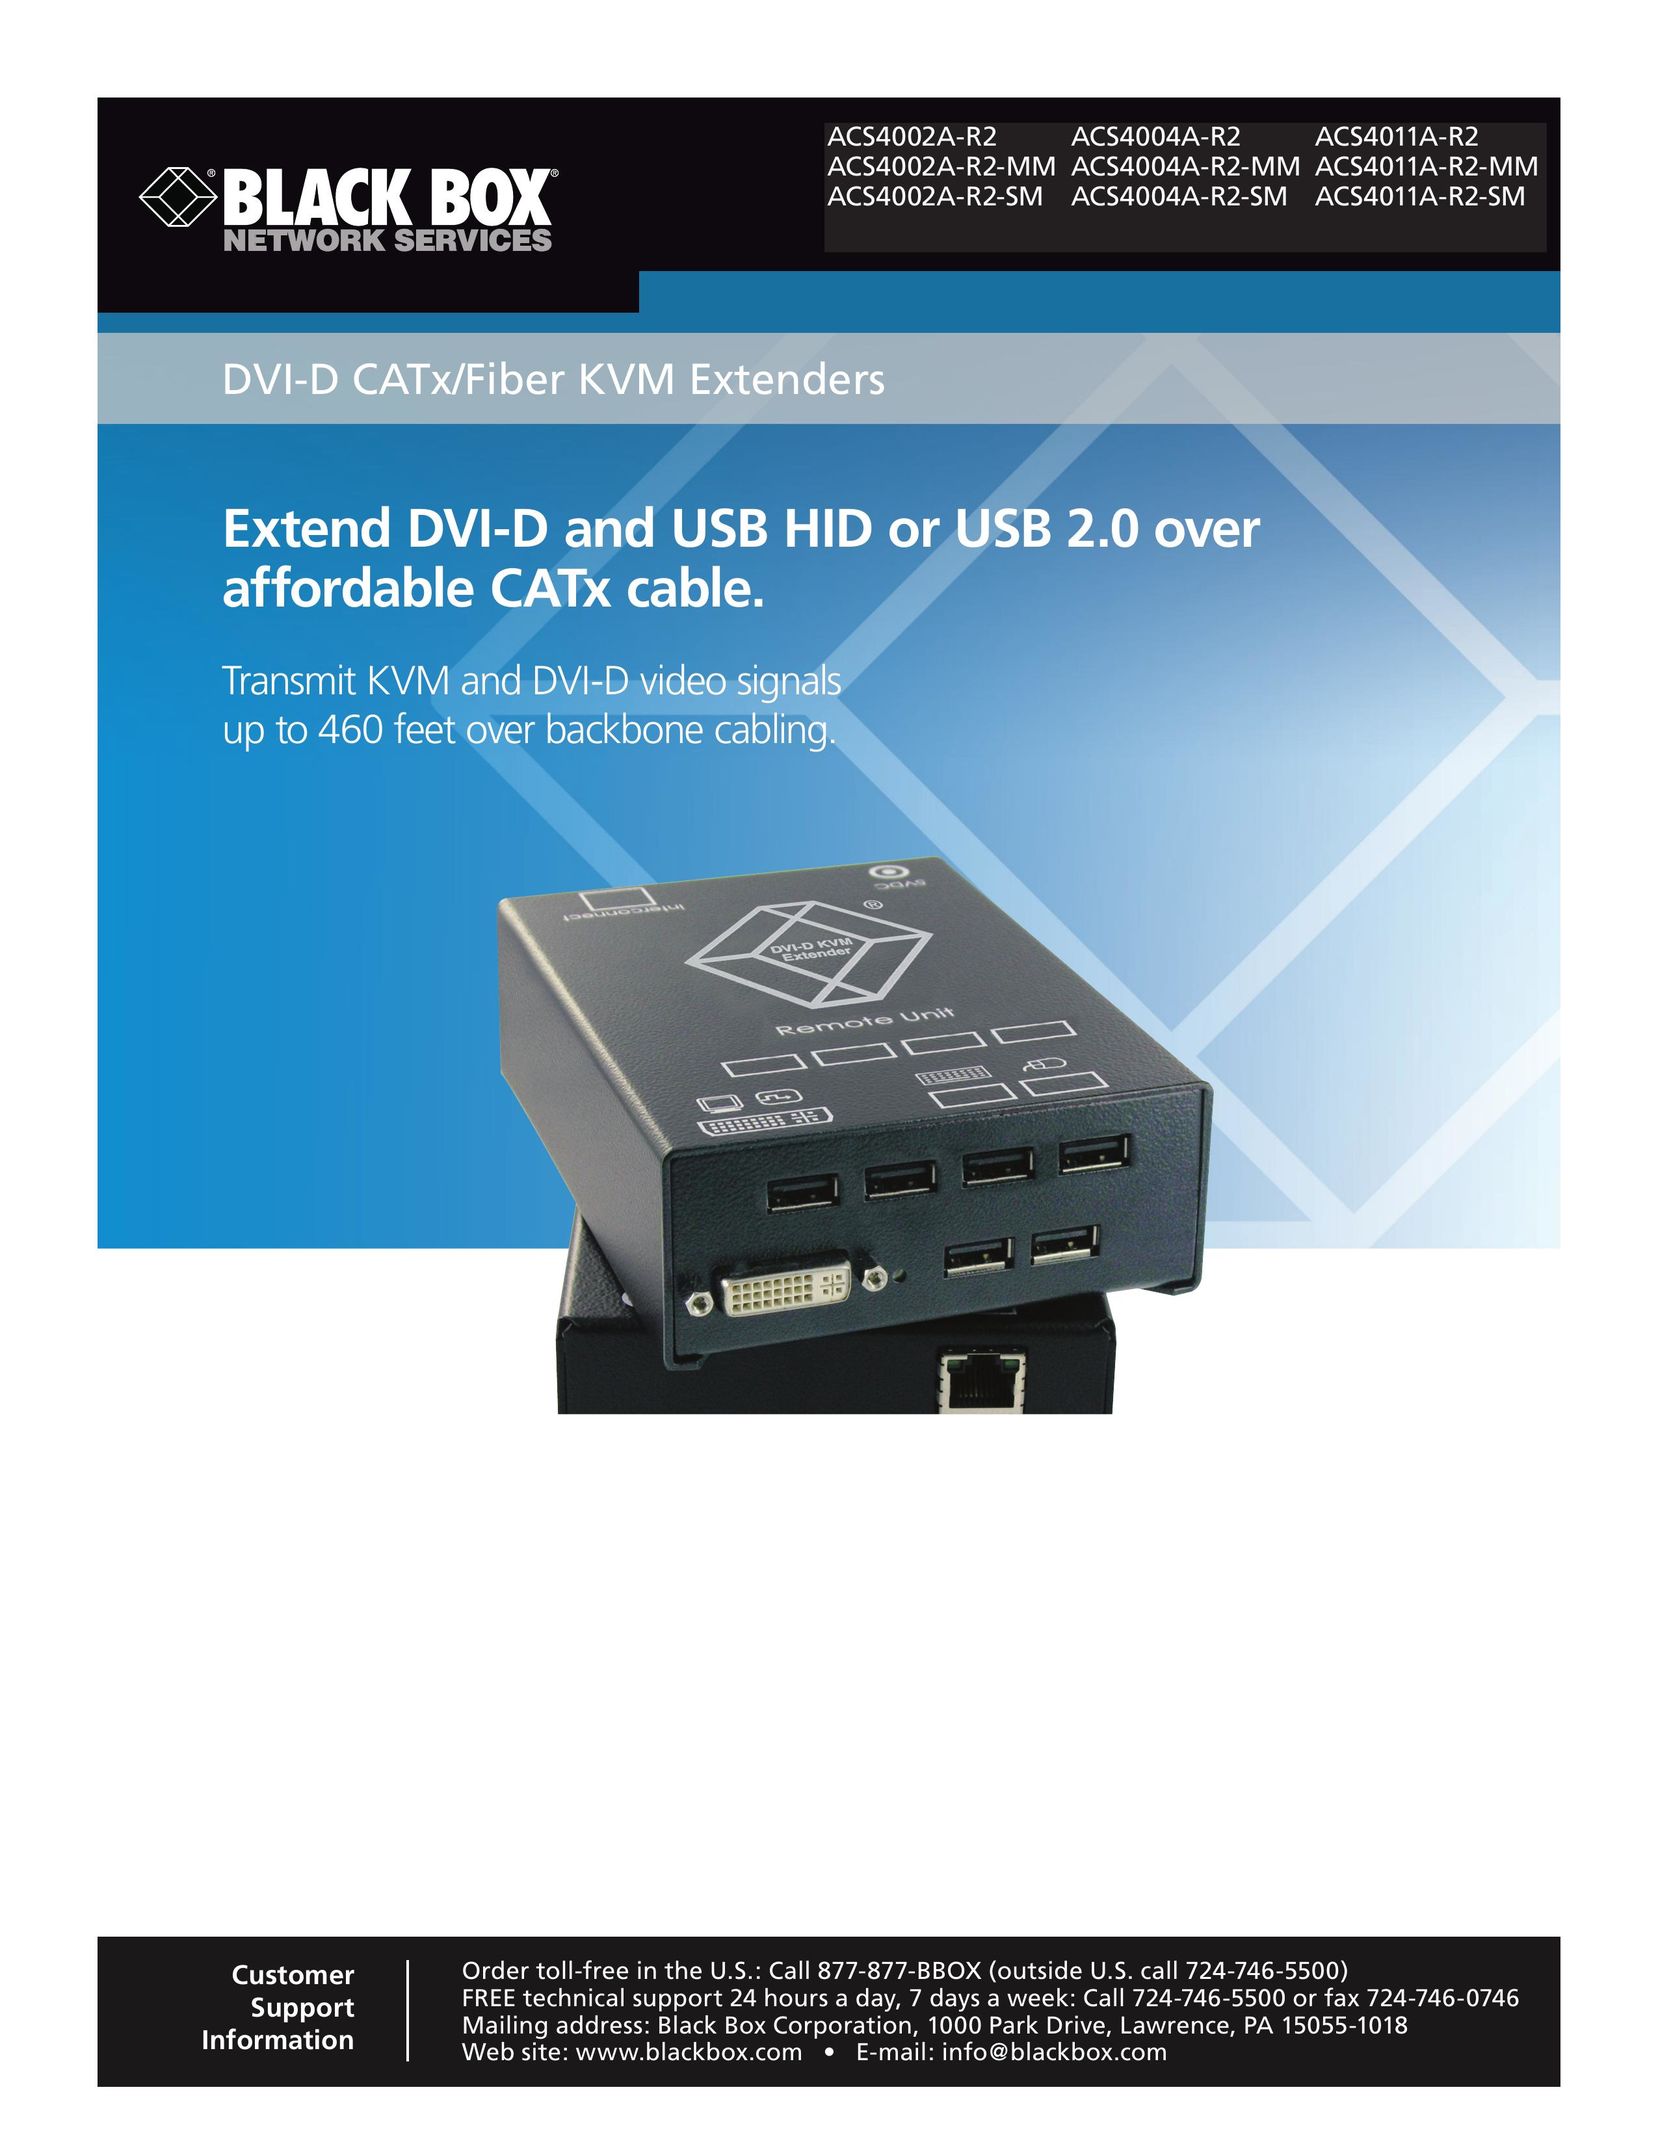 Black Box ACS4011A-R2-SM Network Hardware User Manual